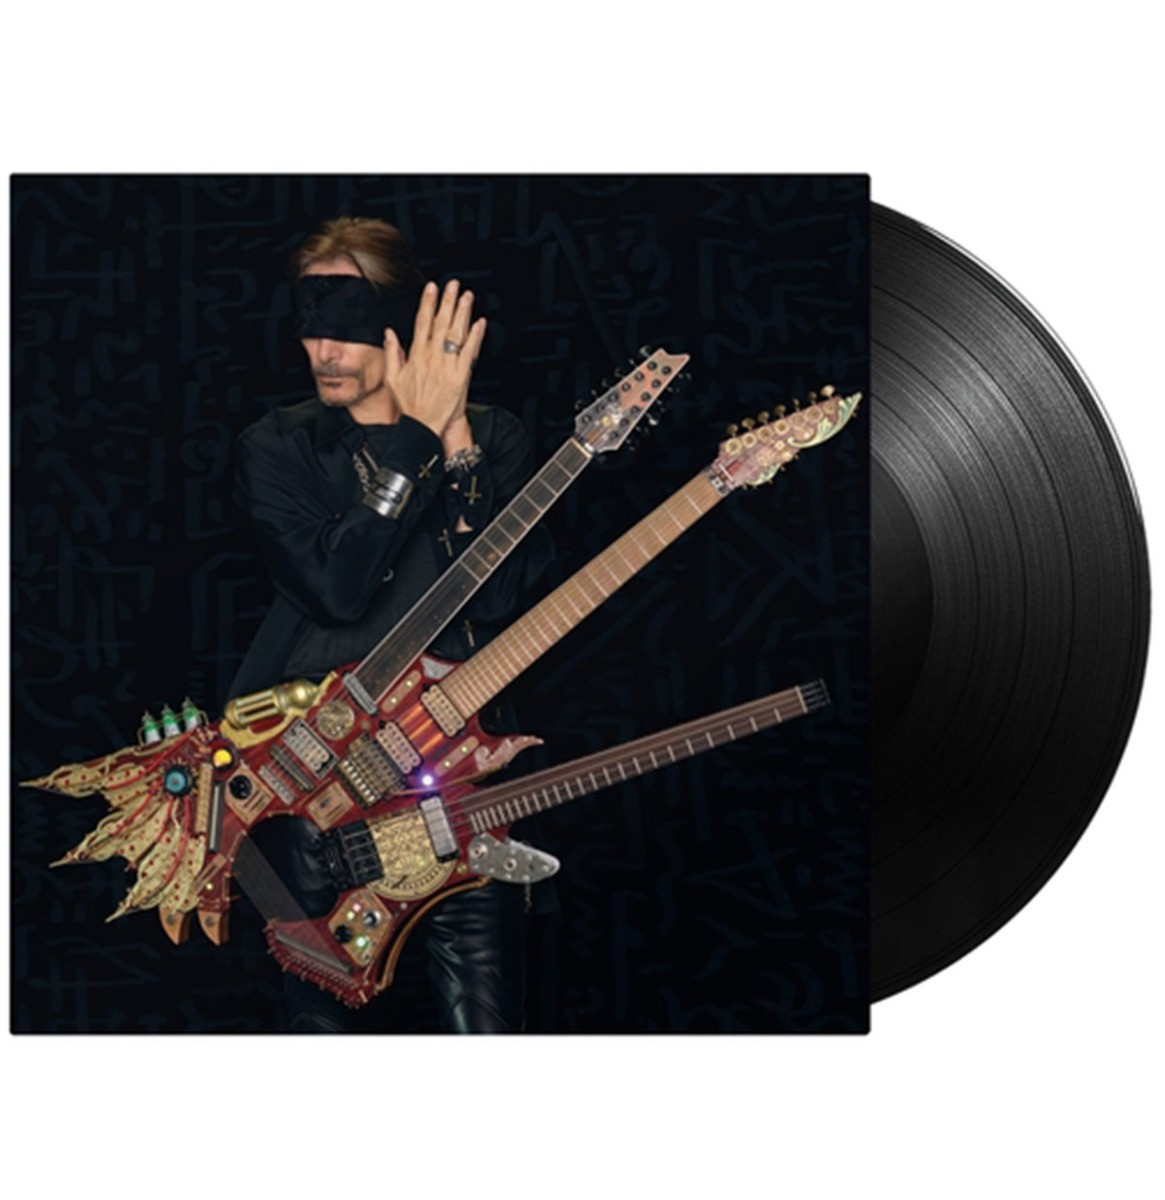 Steve Vai - Inviolate LP